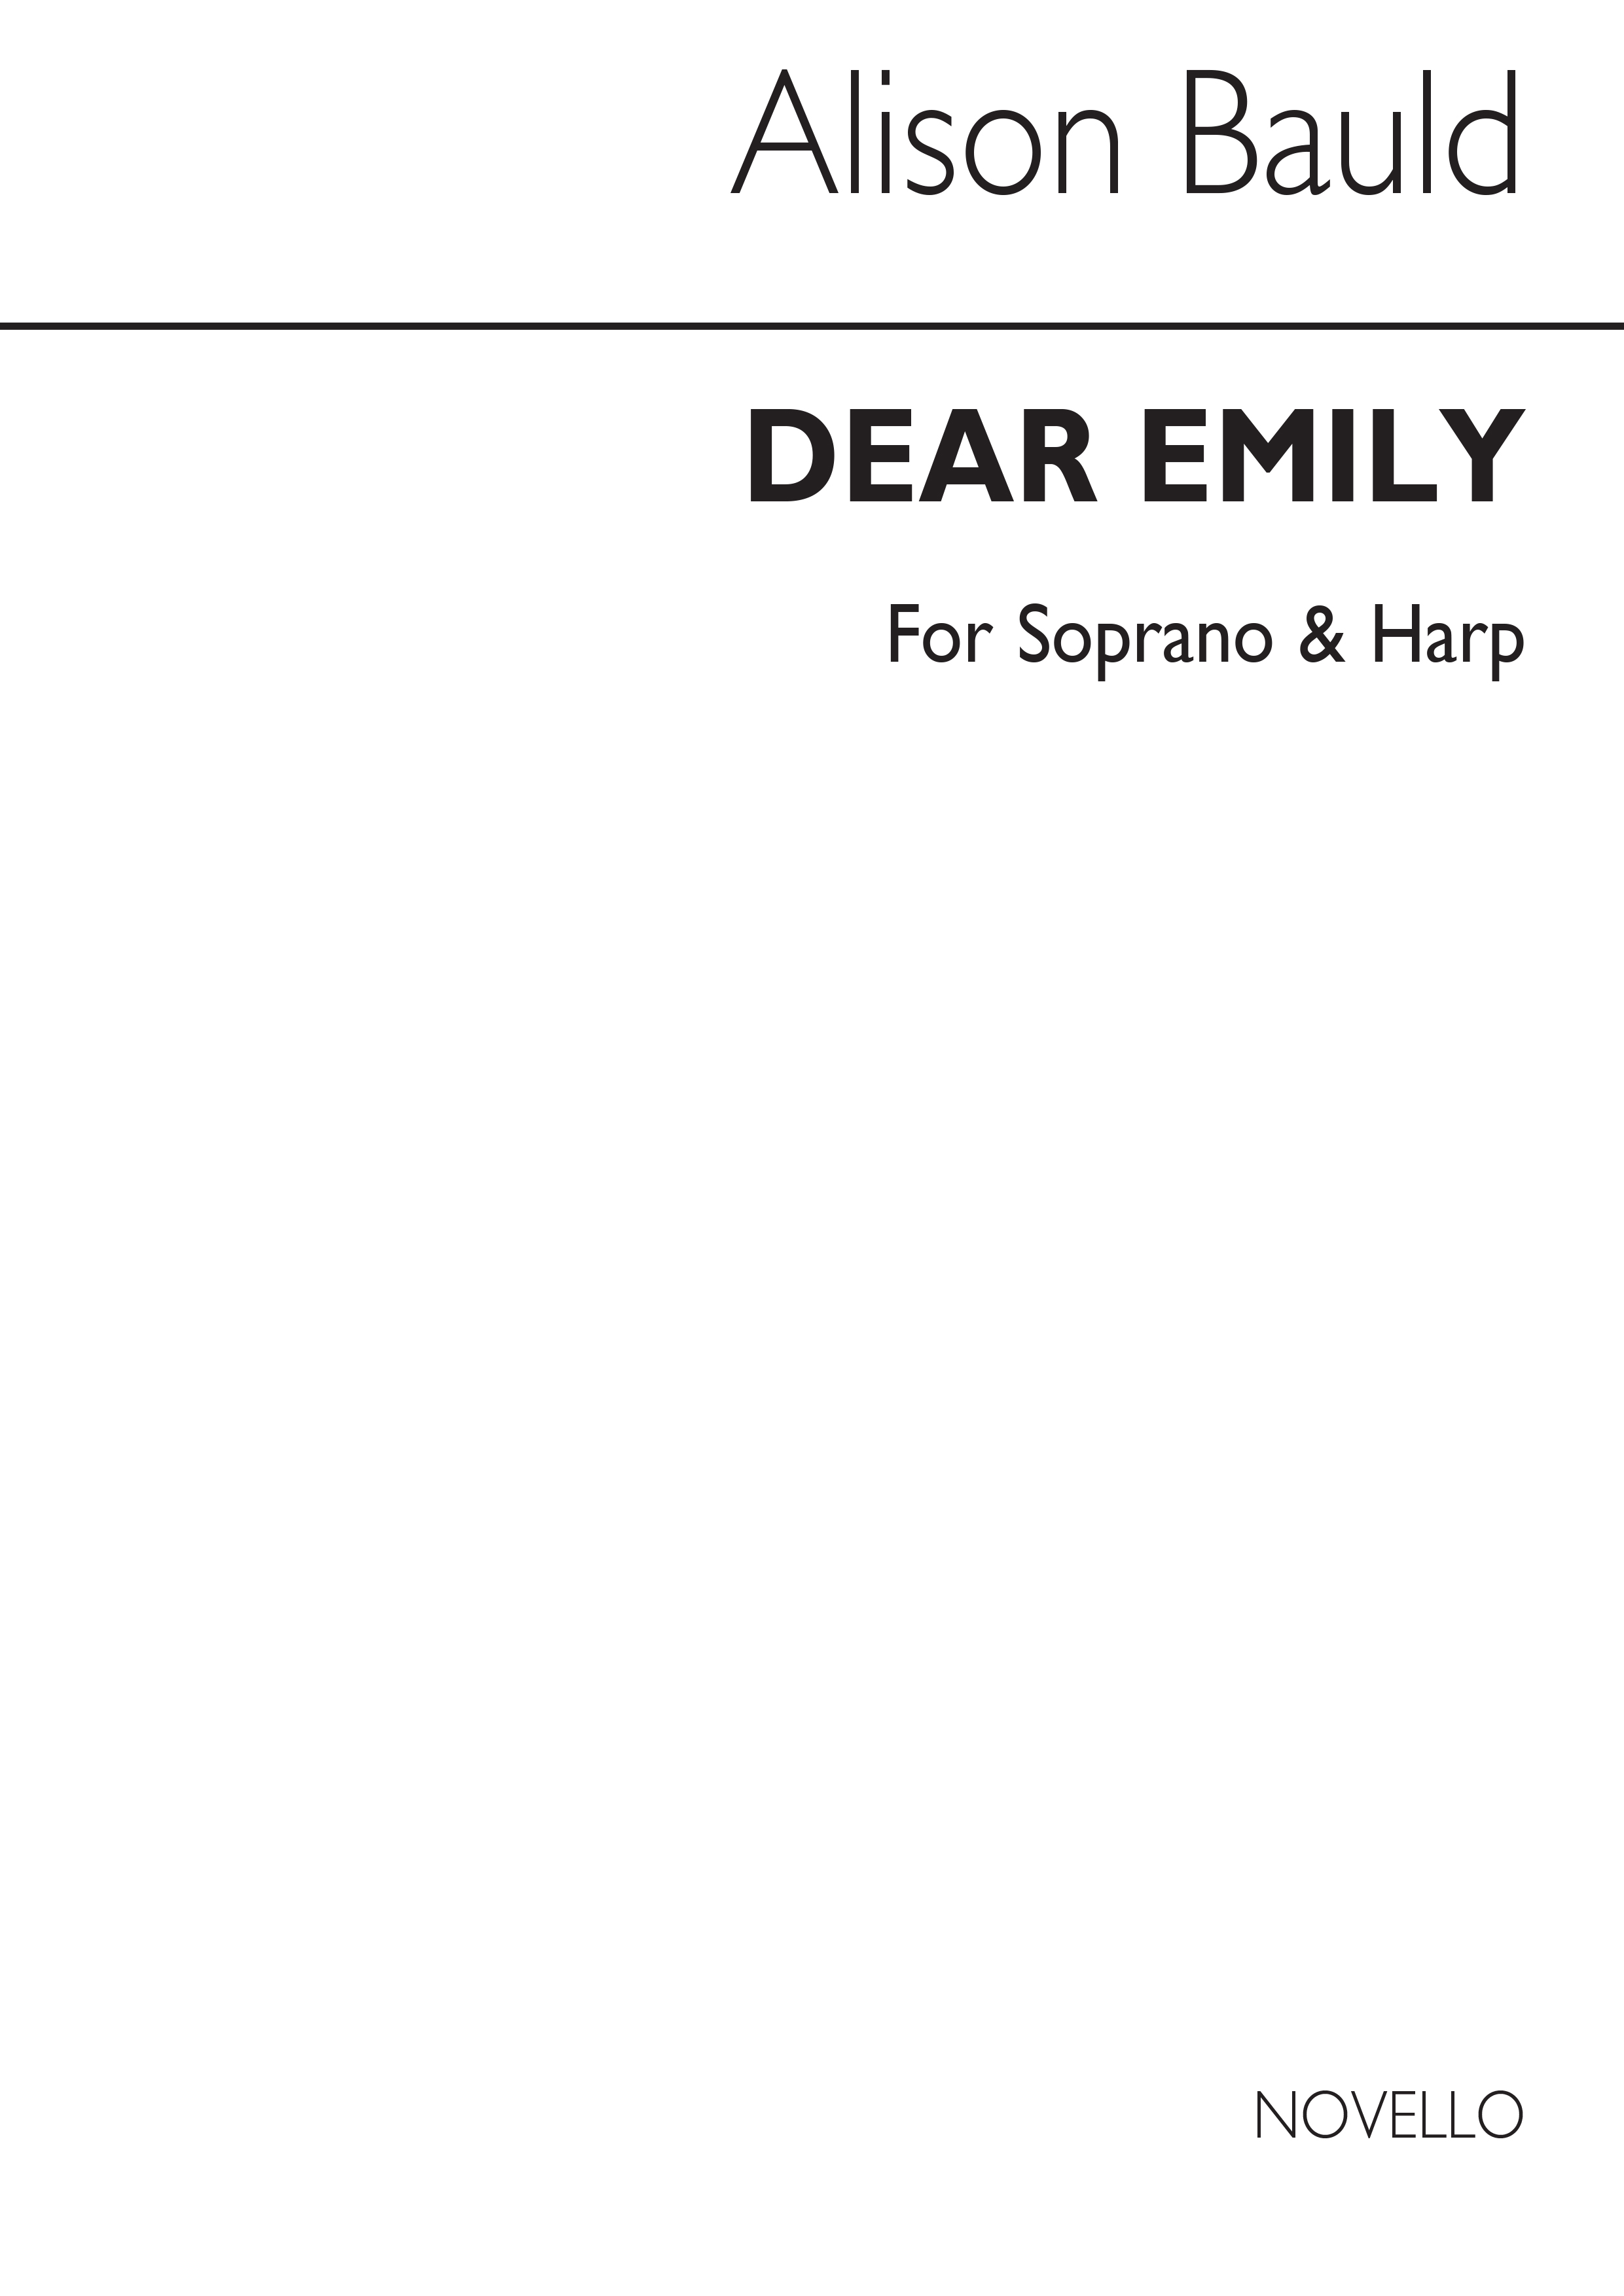 Bauld: Dear Emily for Soprano and Harp, Harpsichord or Piano accompaniment